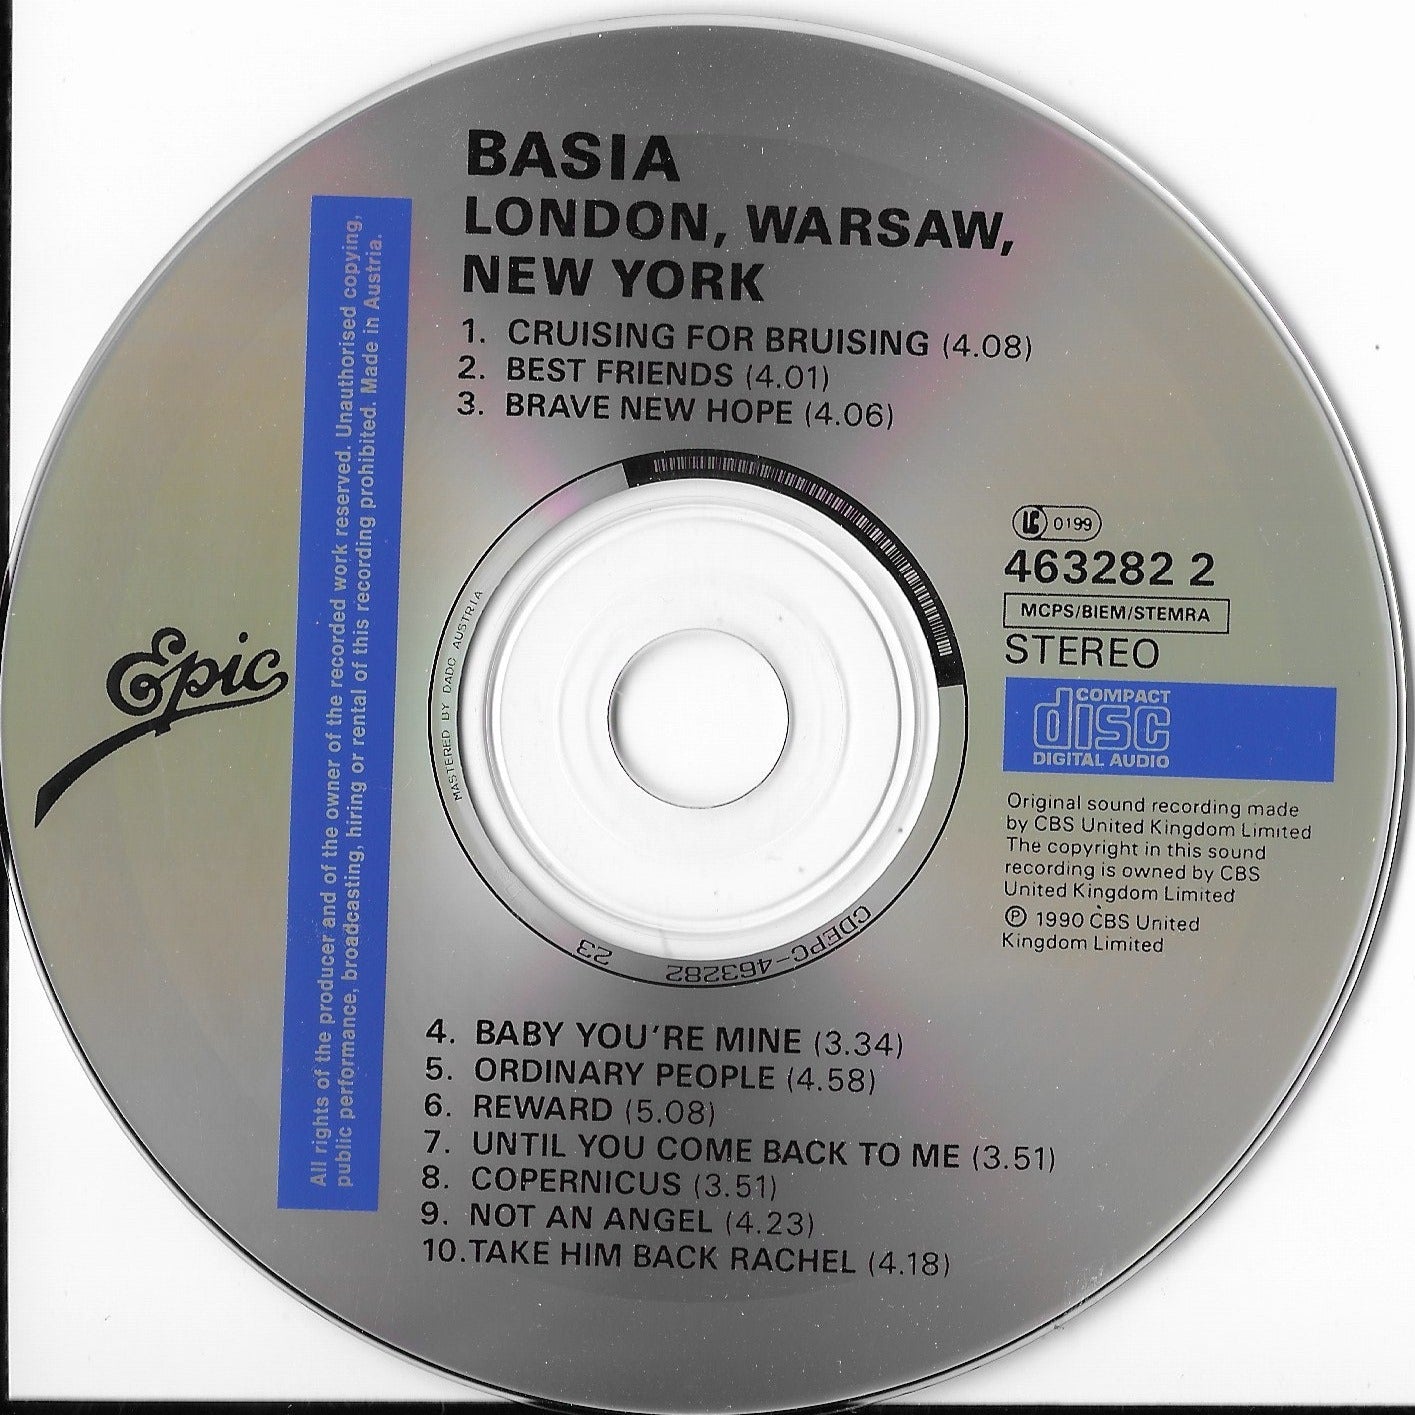 BASIA - London Warsaw New York